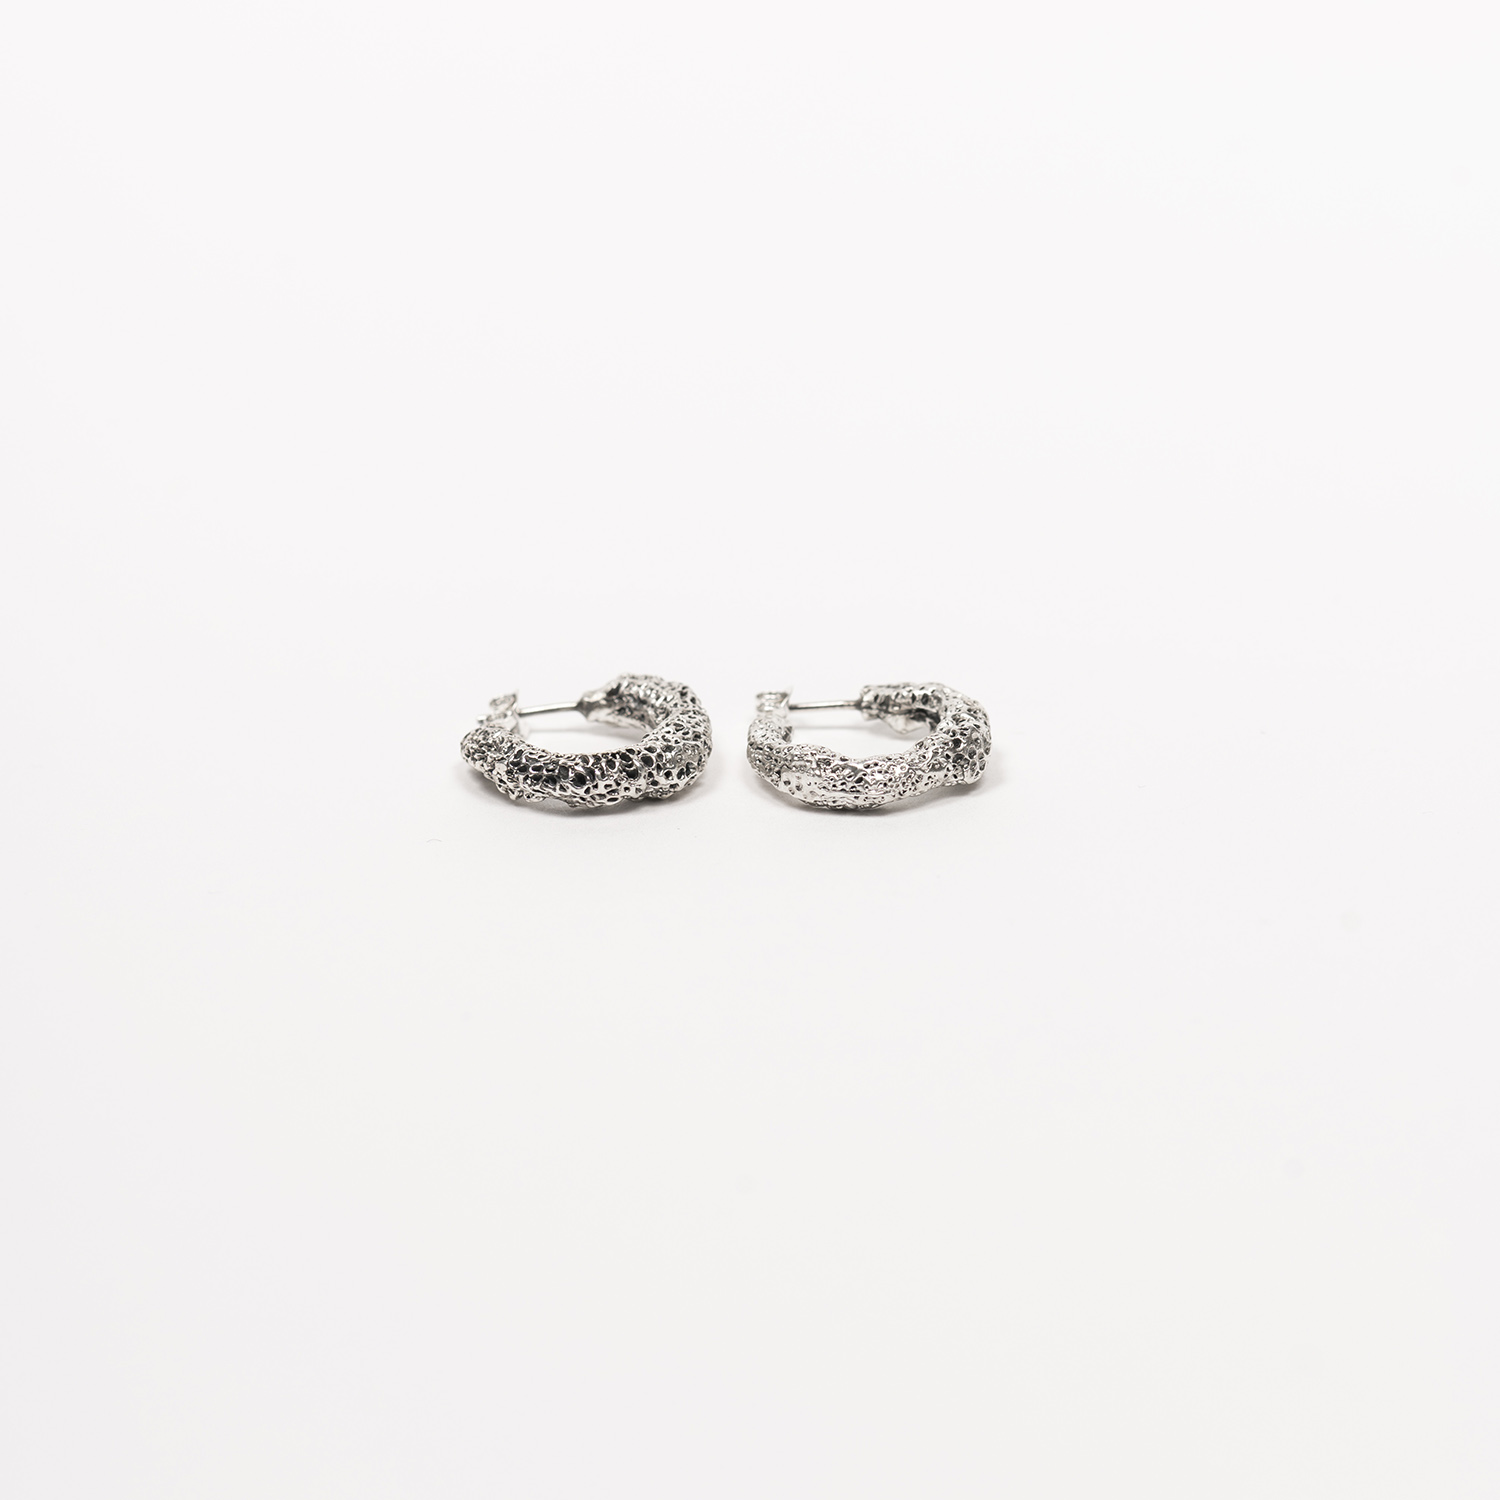 Corallo silver earrings